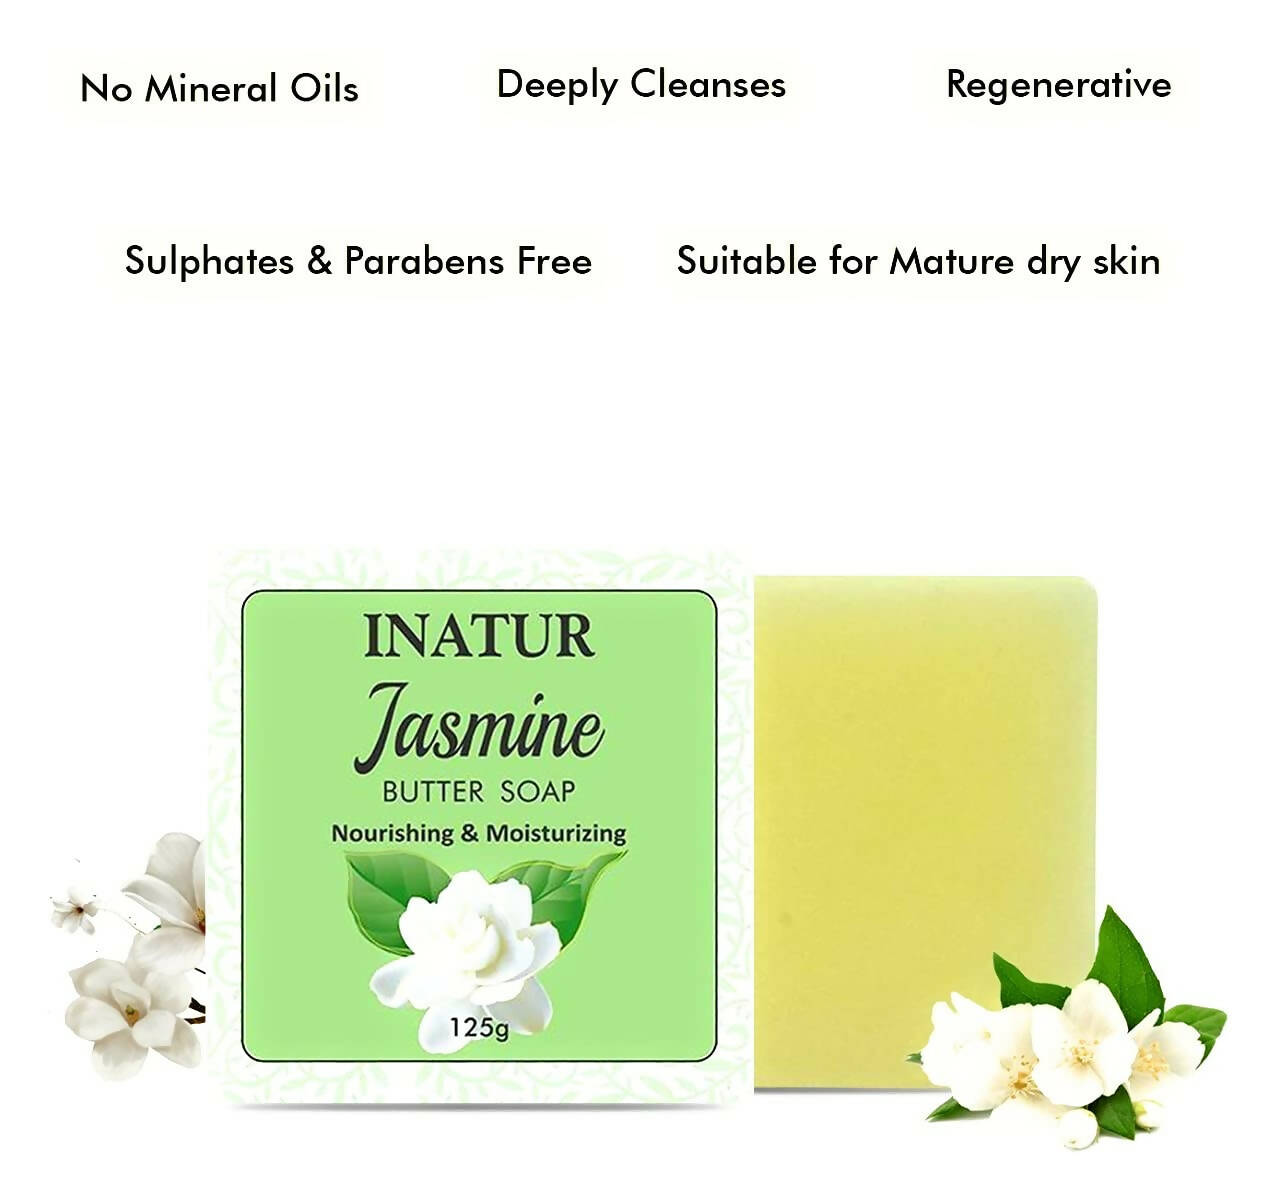 Inatur Jasmin Butter Soap